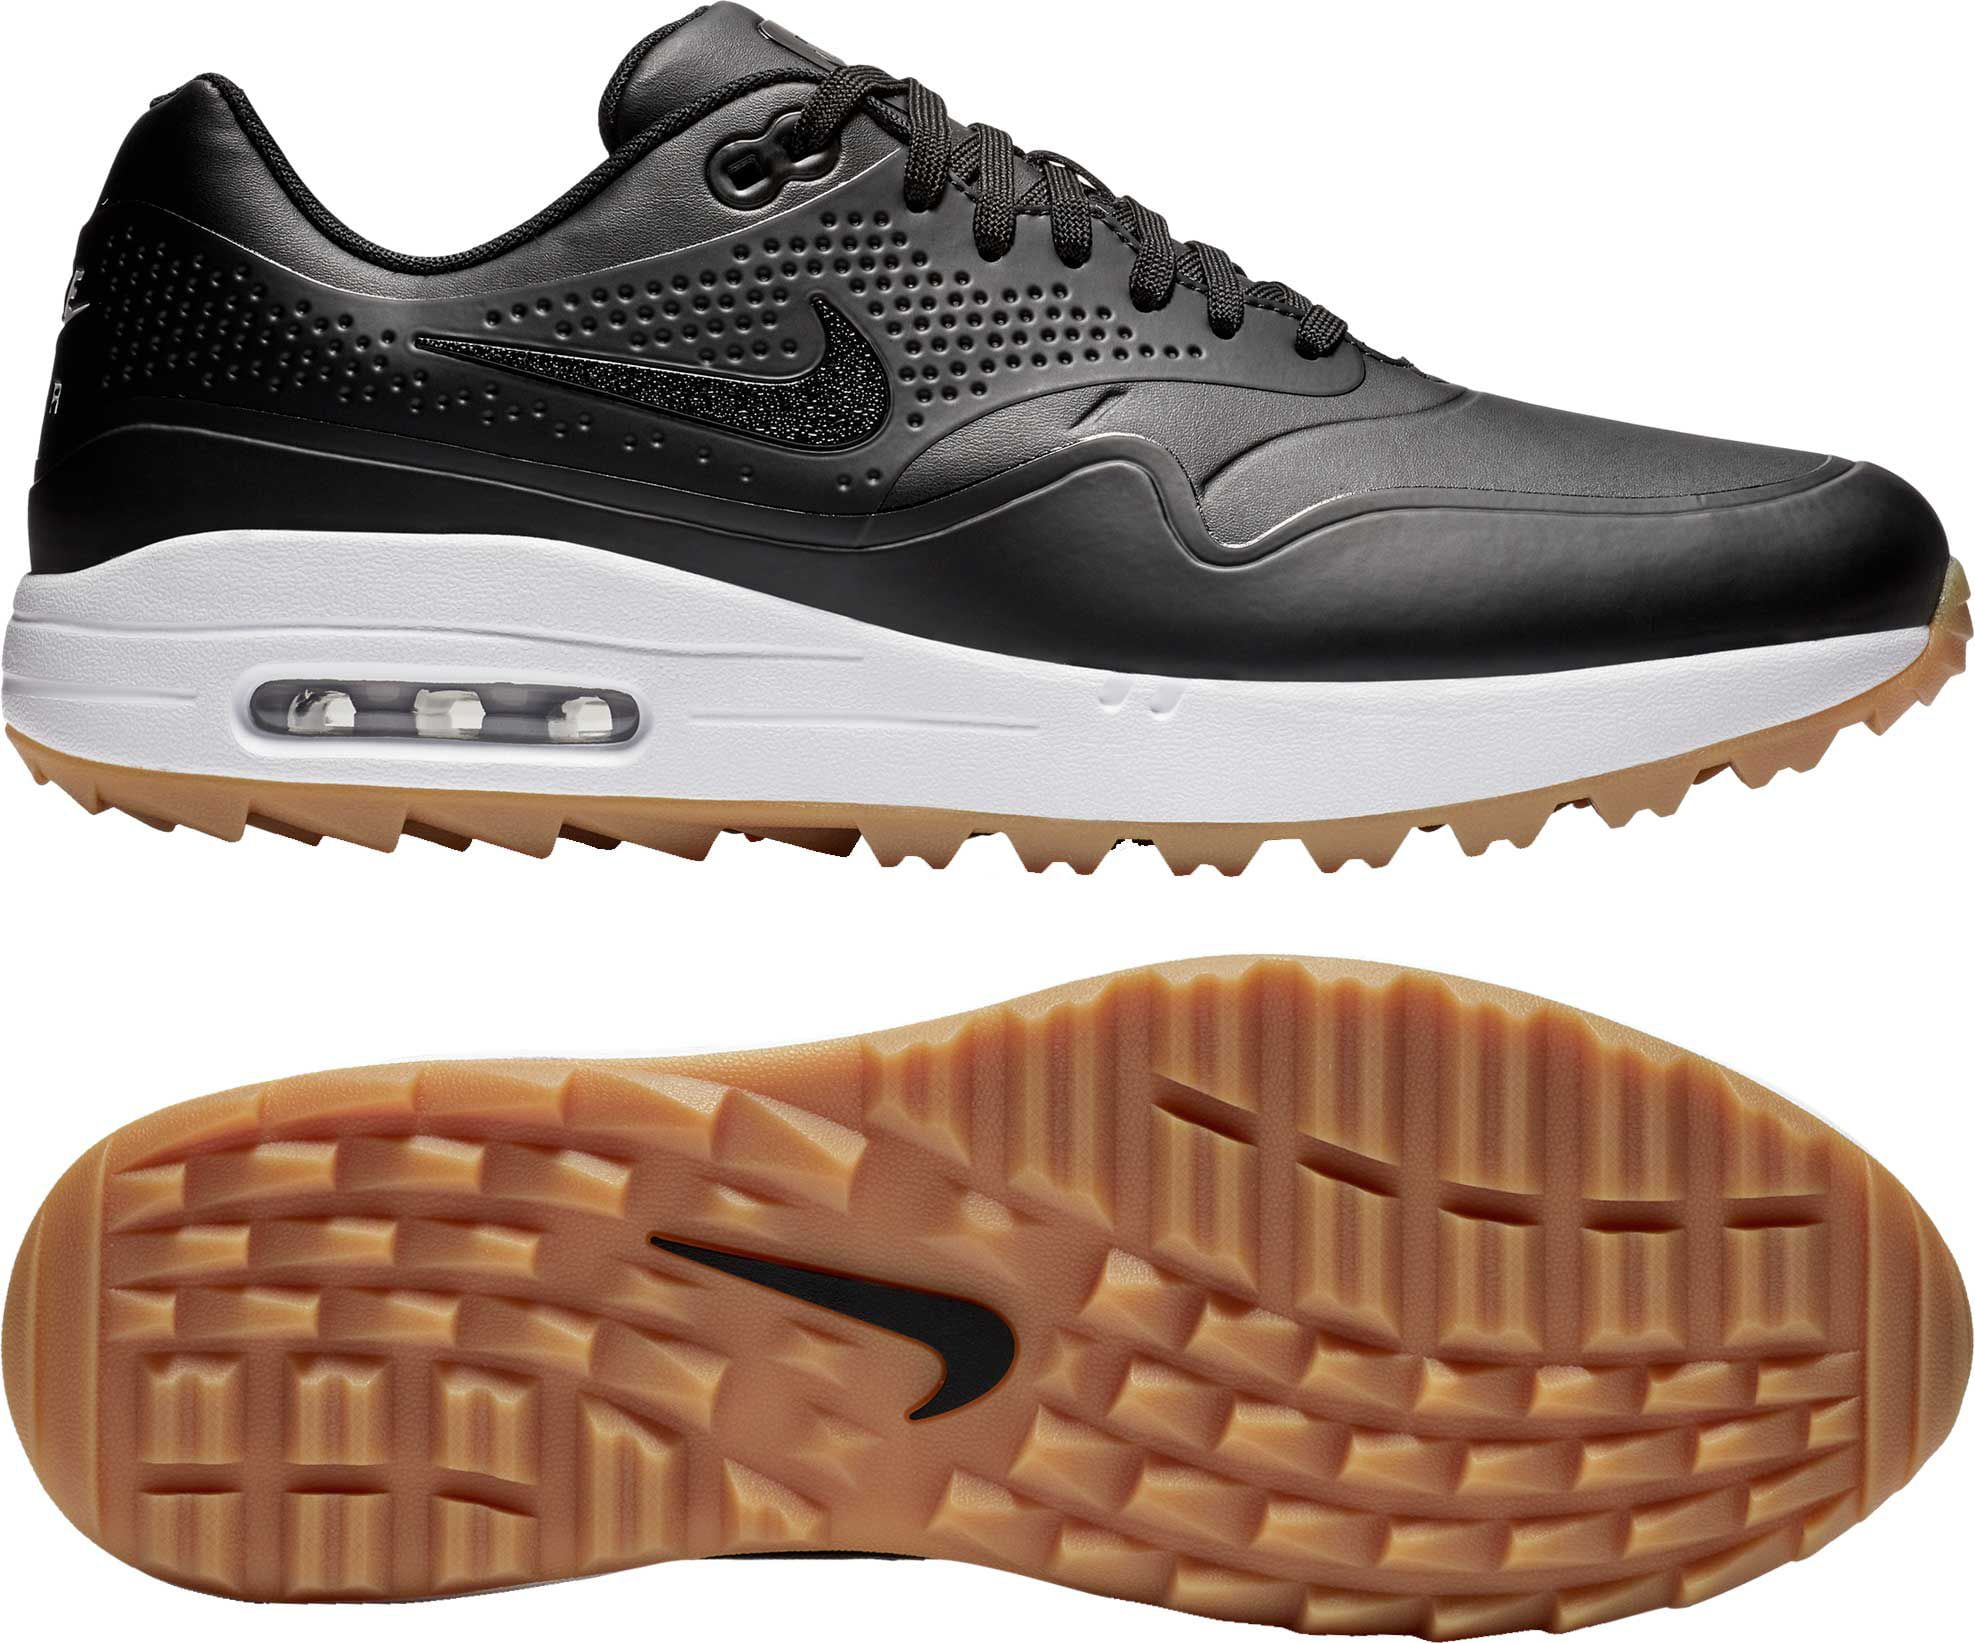 nike men's air max golf shoes